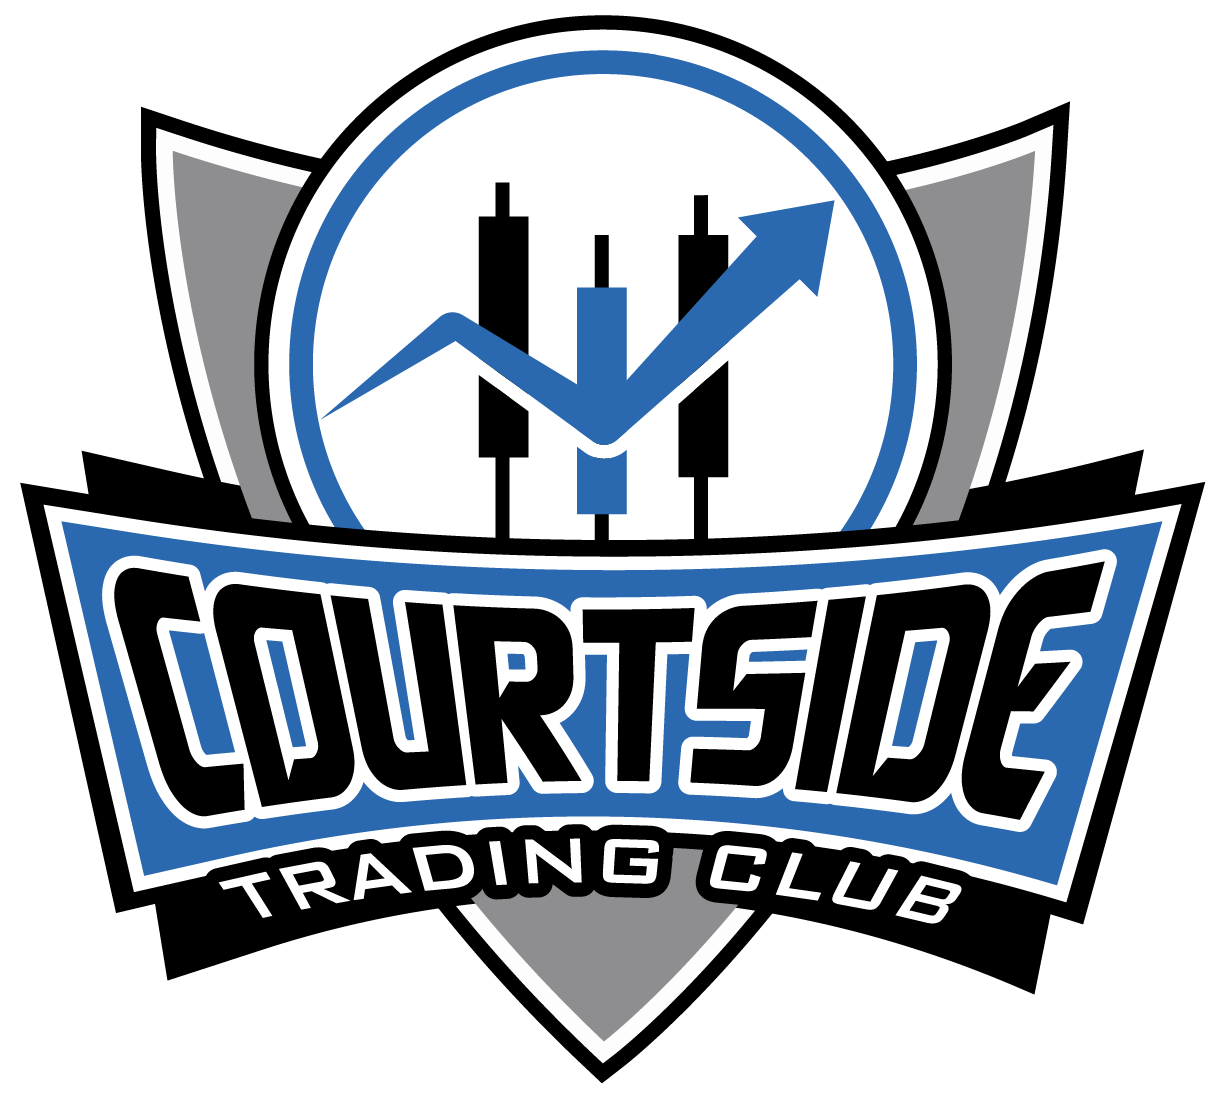 Courtside Trading Club Promo: Flash Sale 35% Off